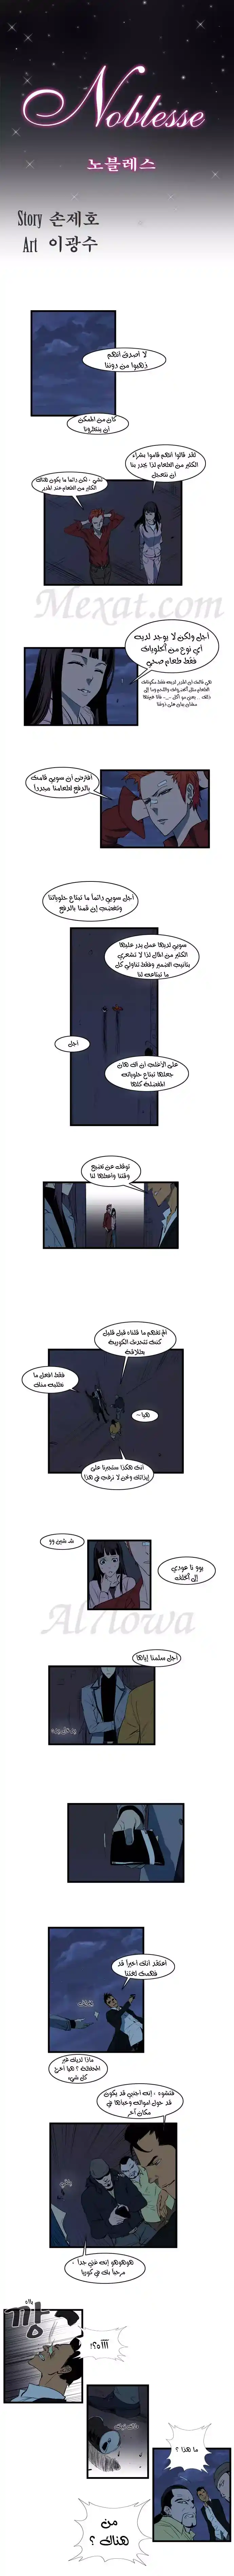 NOBLESSE 111 - #111 página 1